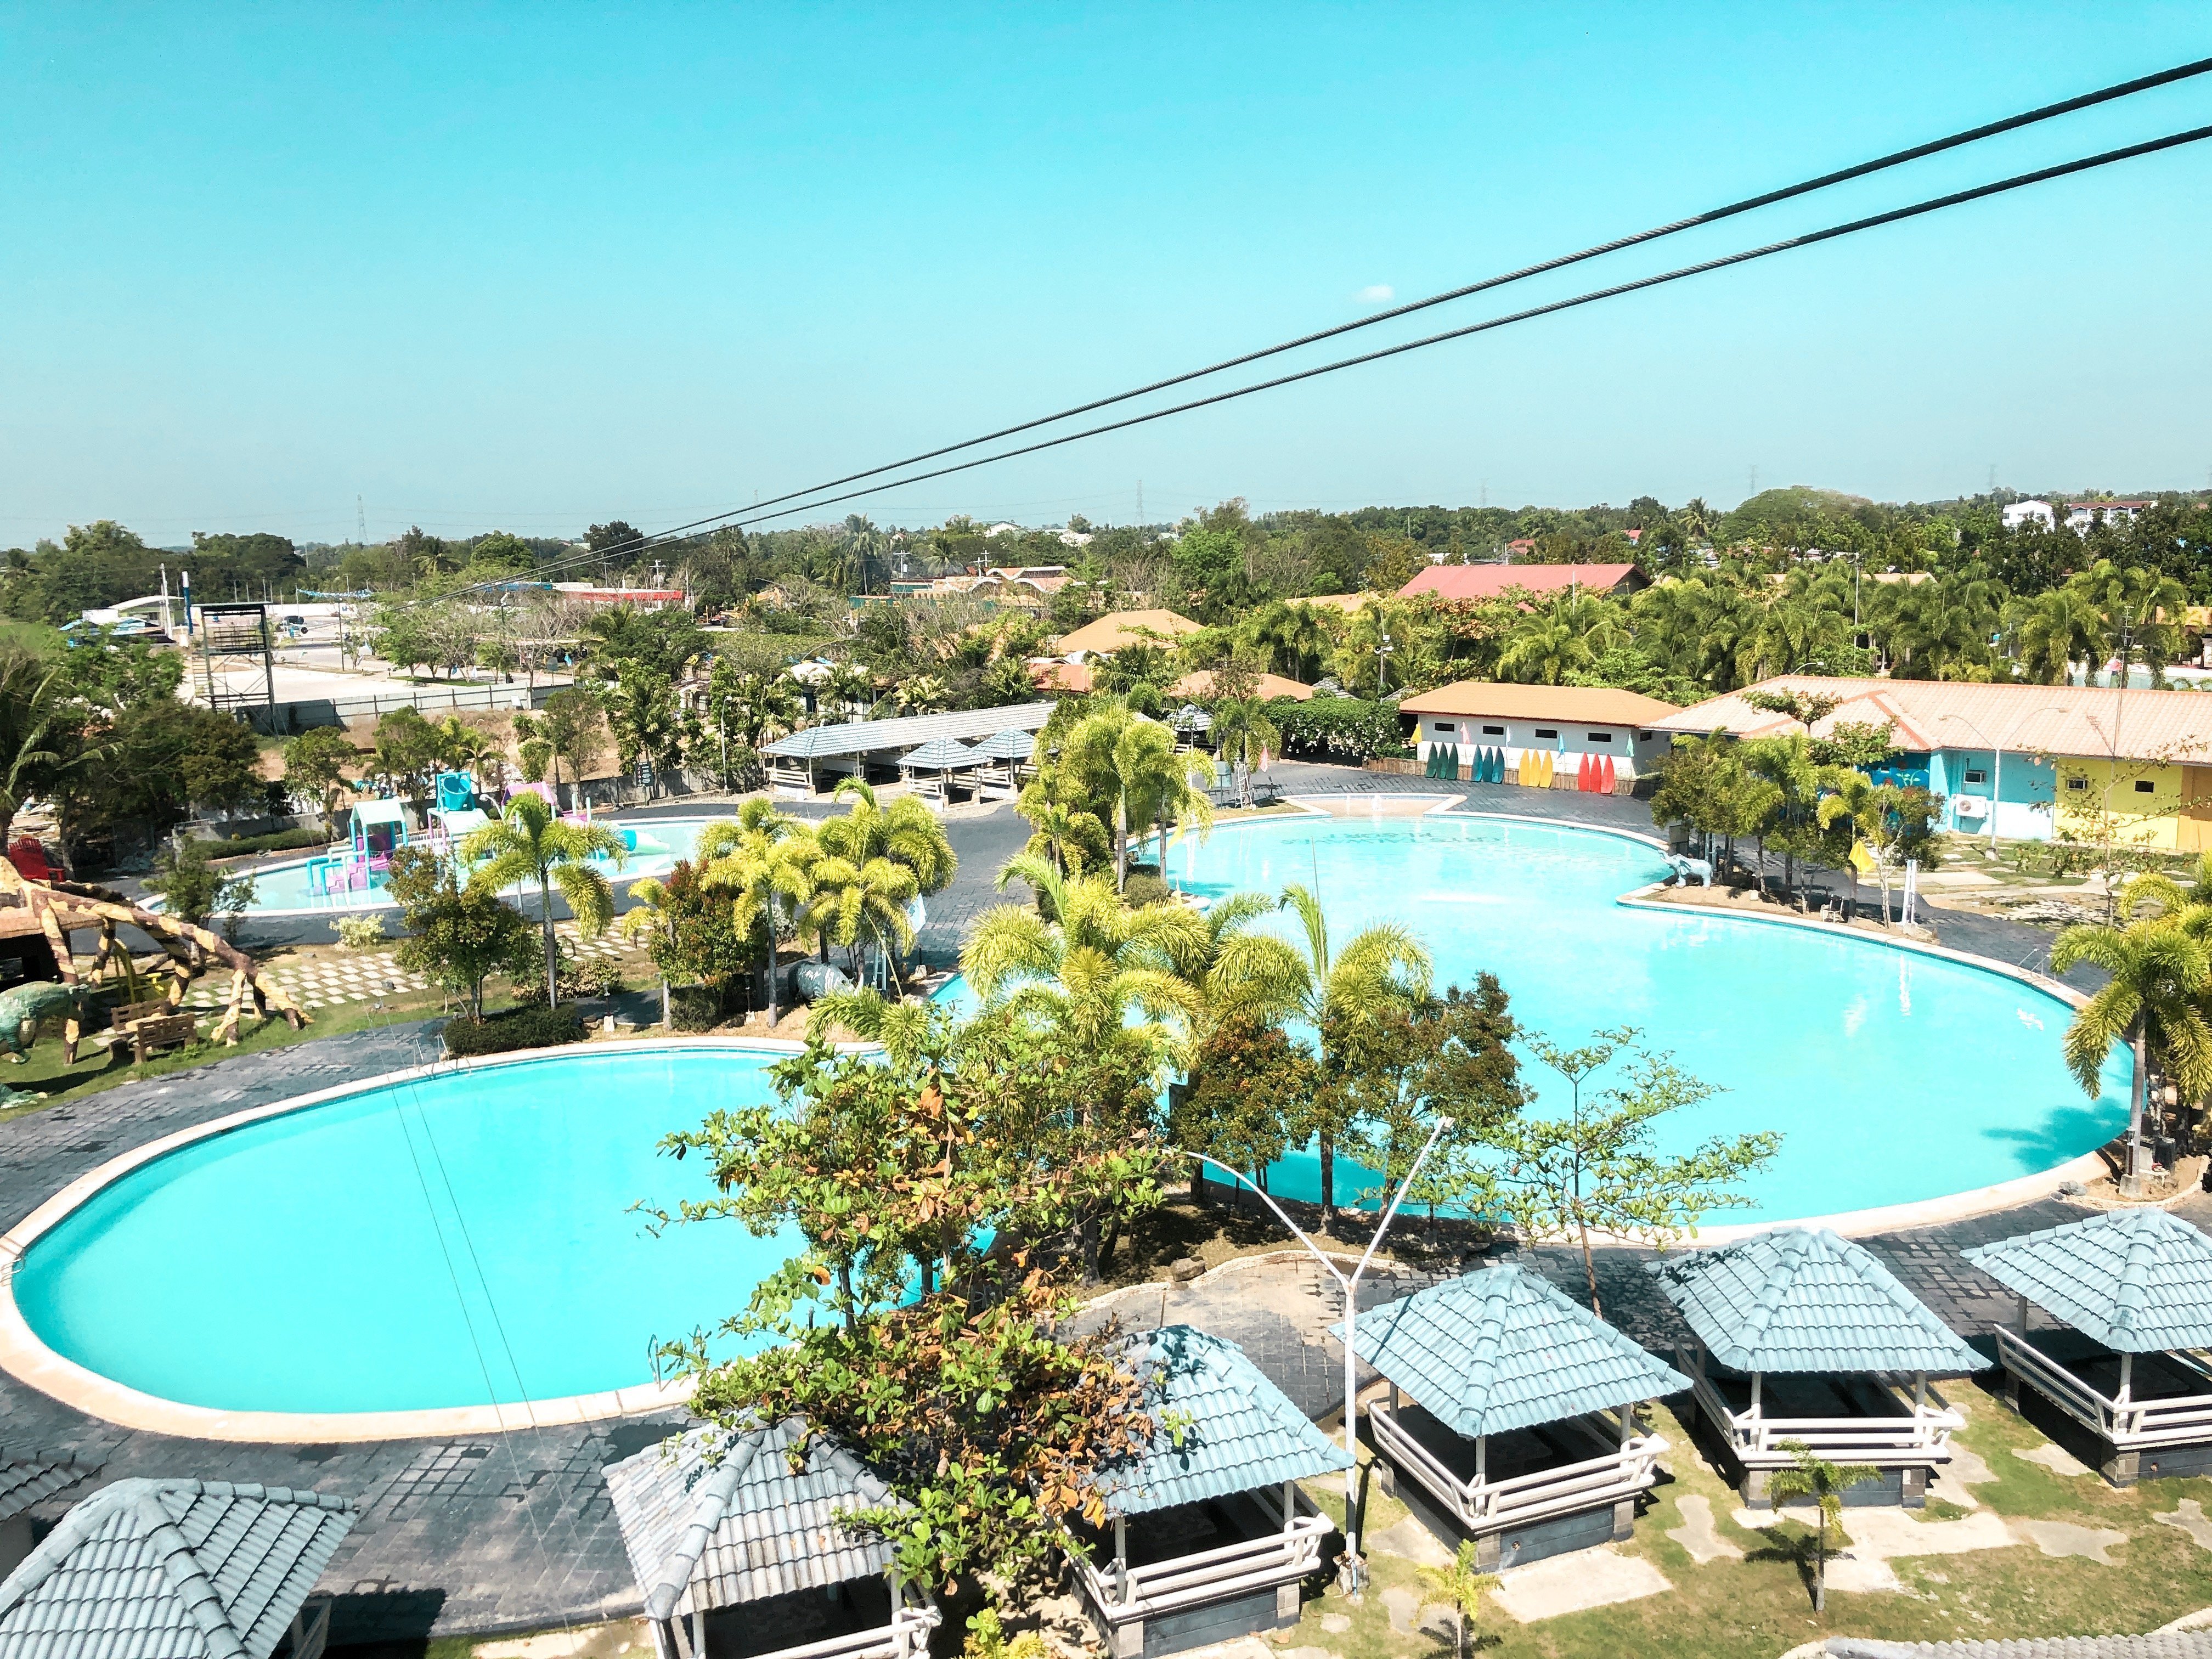 Best Resort in Nueva Ecija Celebrates its 9th Year Anniversary: Crystal Waves  Resort - Joan's Footprints